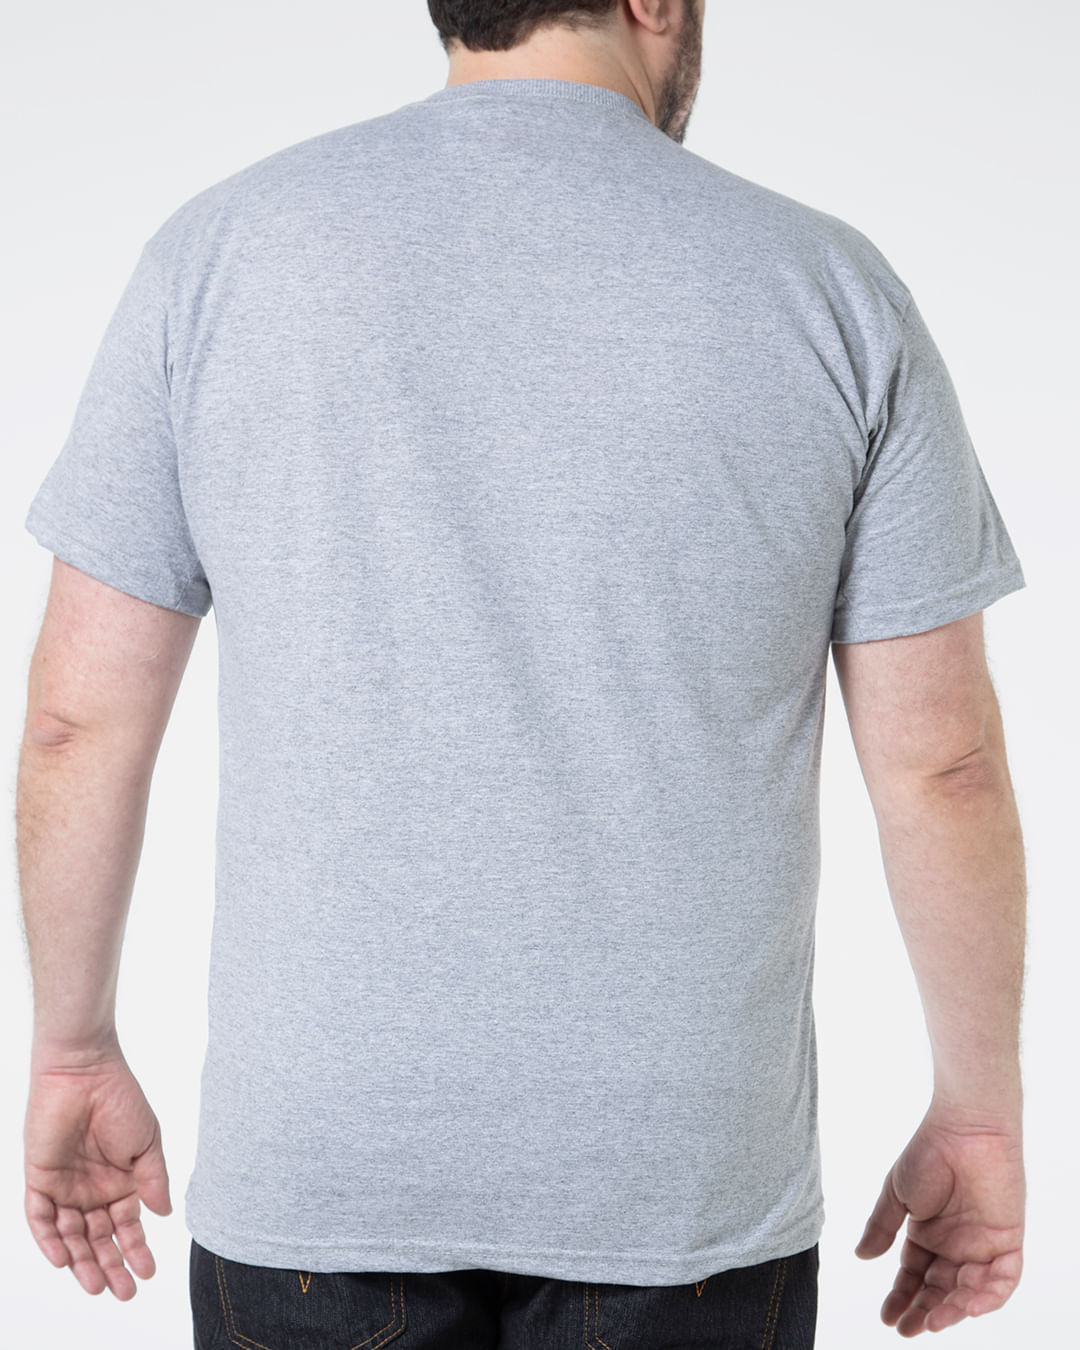 Camiseta-Masculina-Plus-Size-Estampada-Surf-Fatal-Cinza